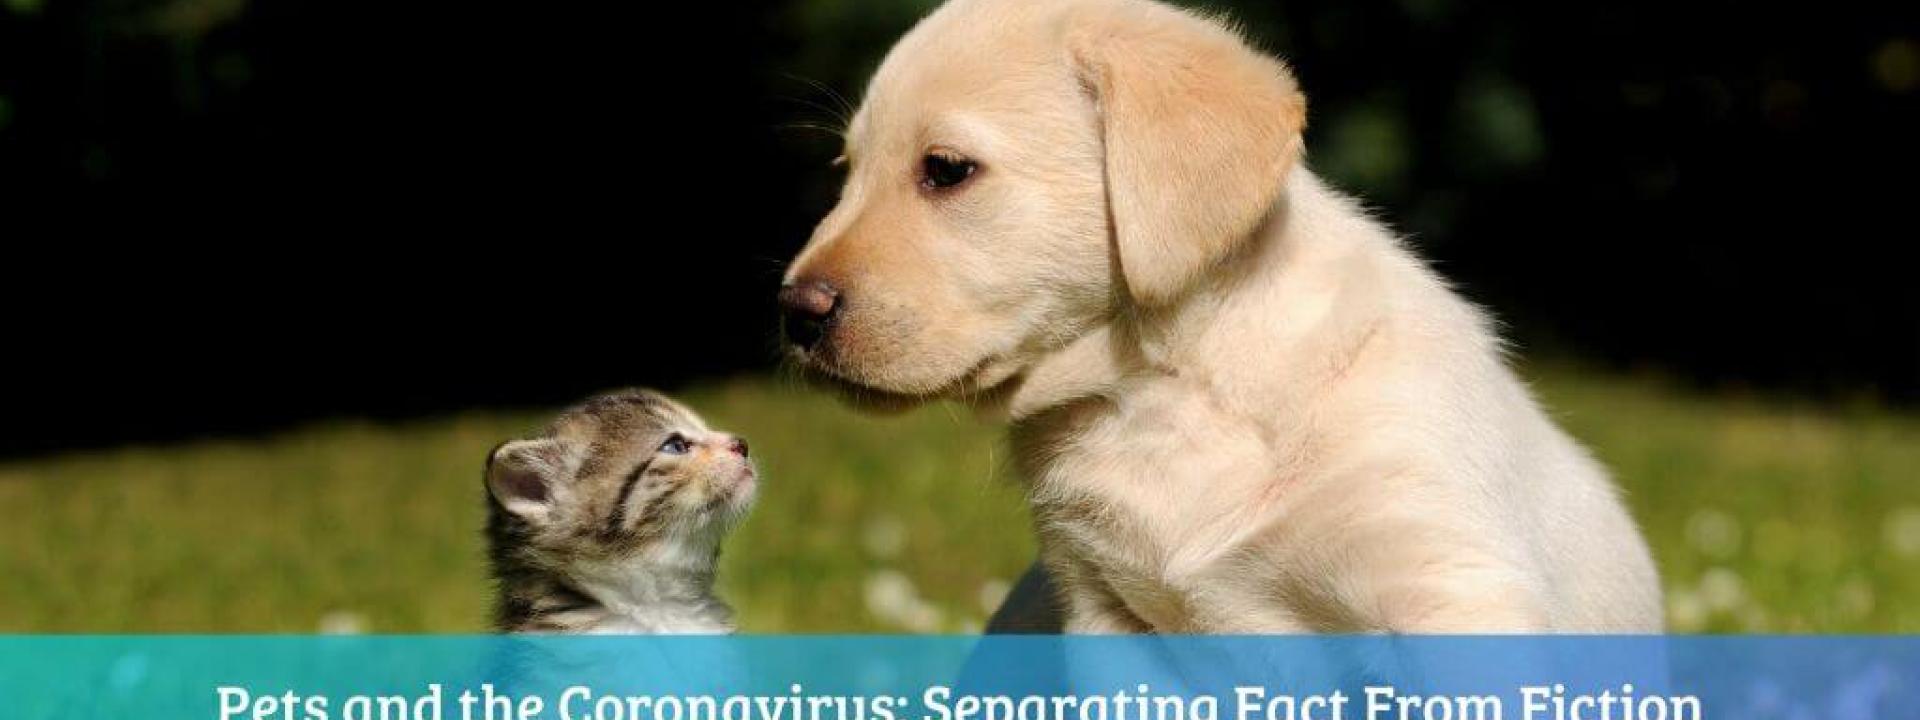 Pets can't spread coronavirus 